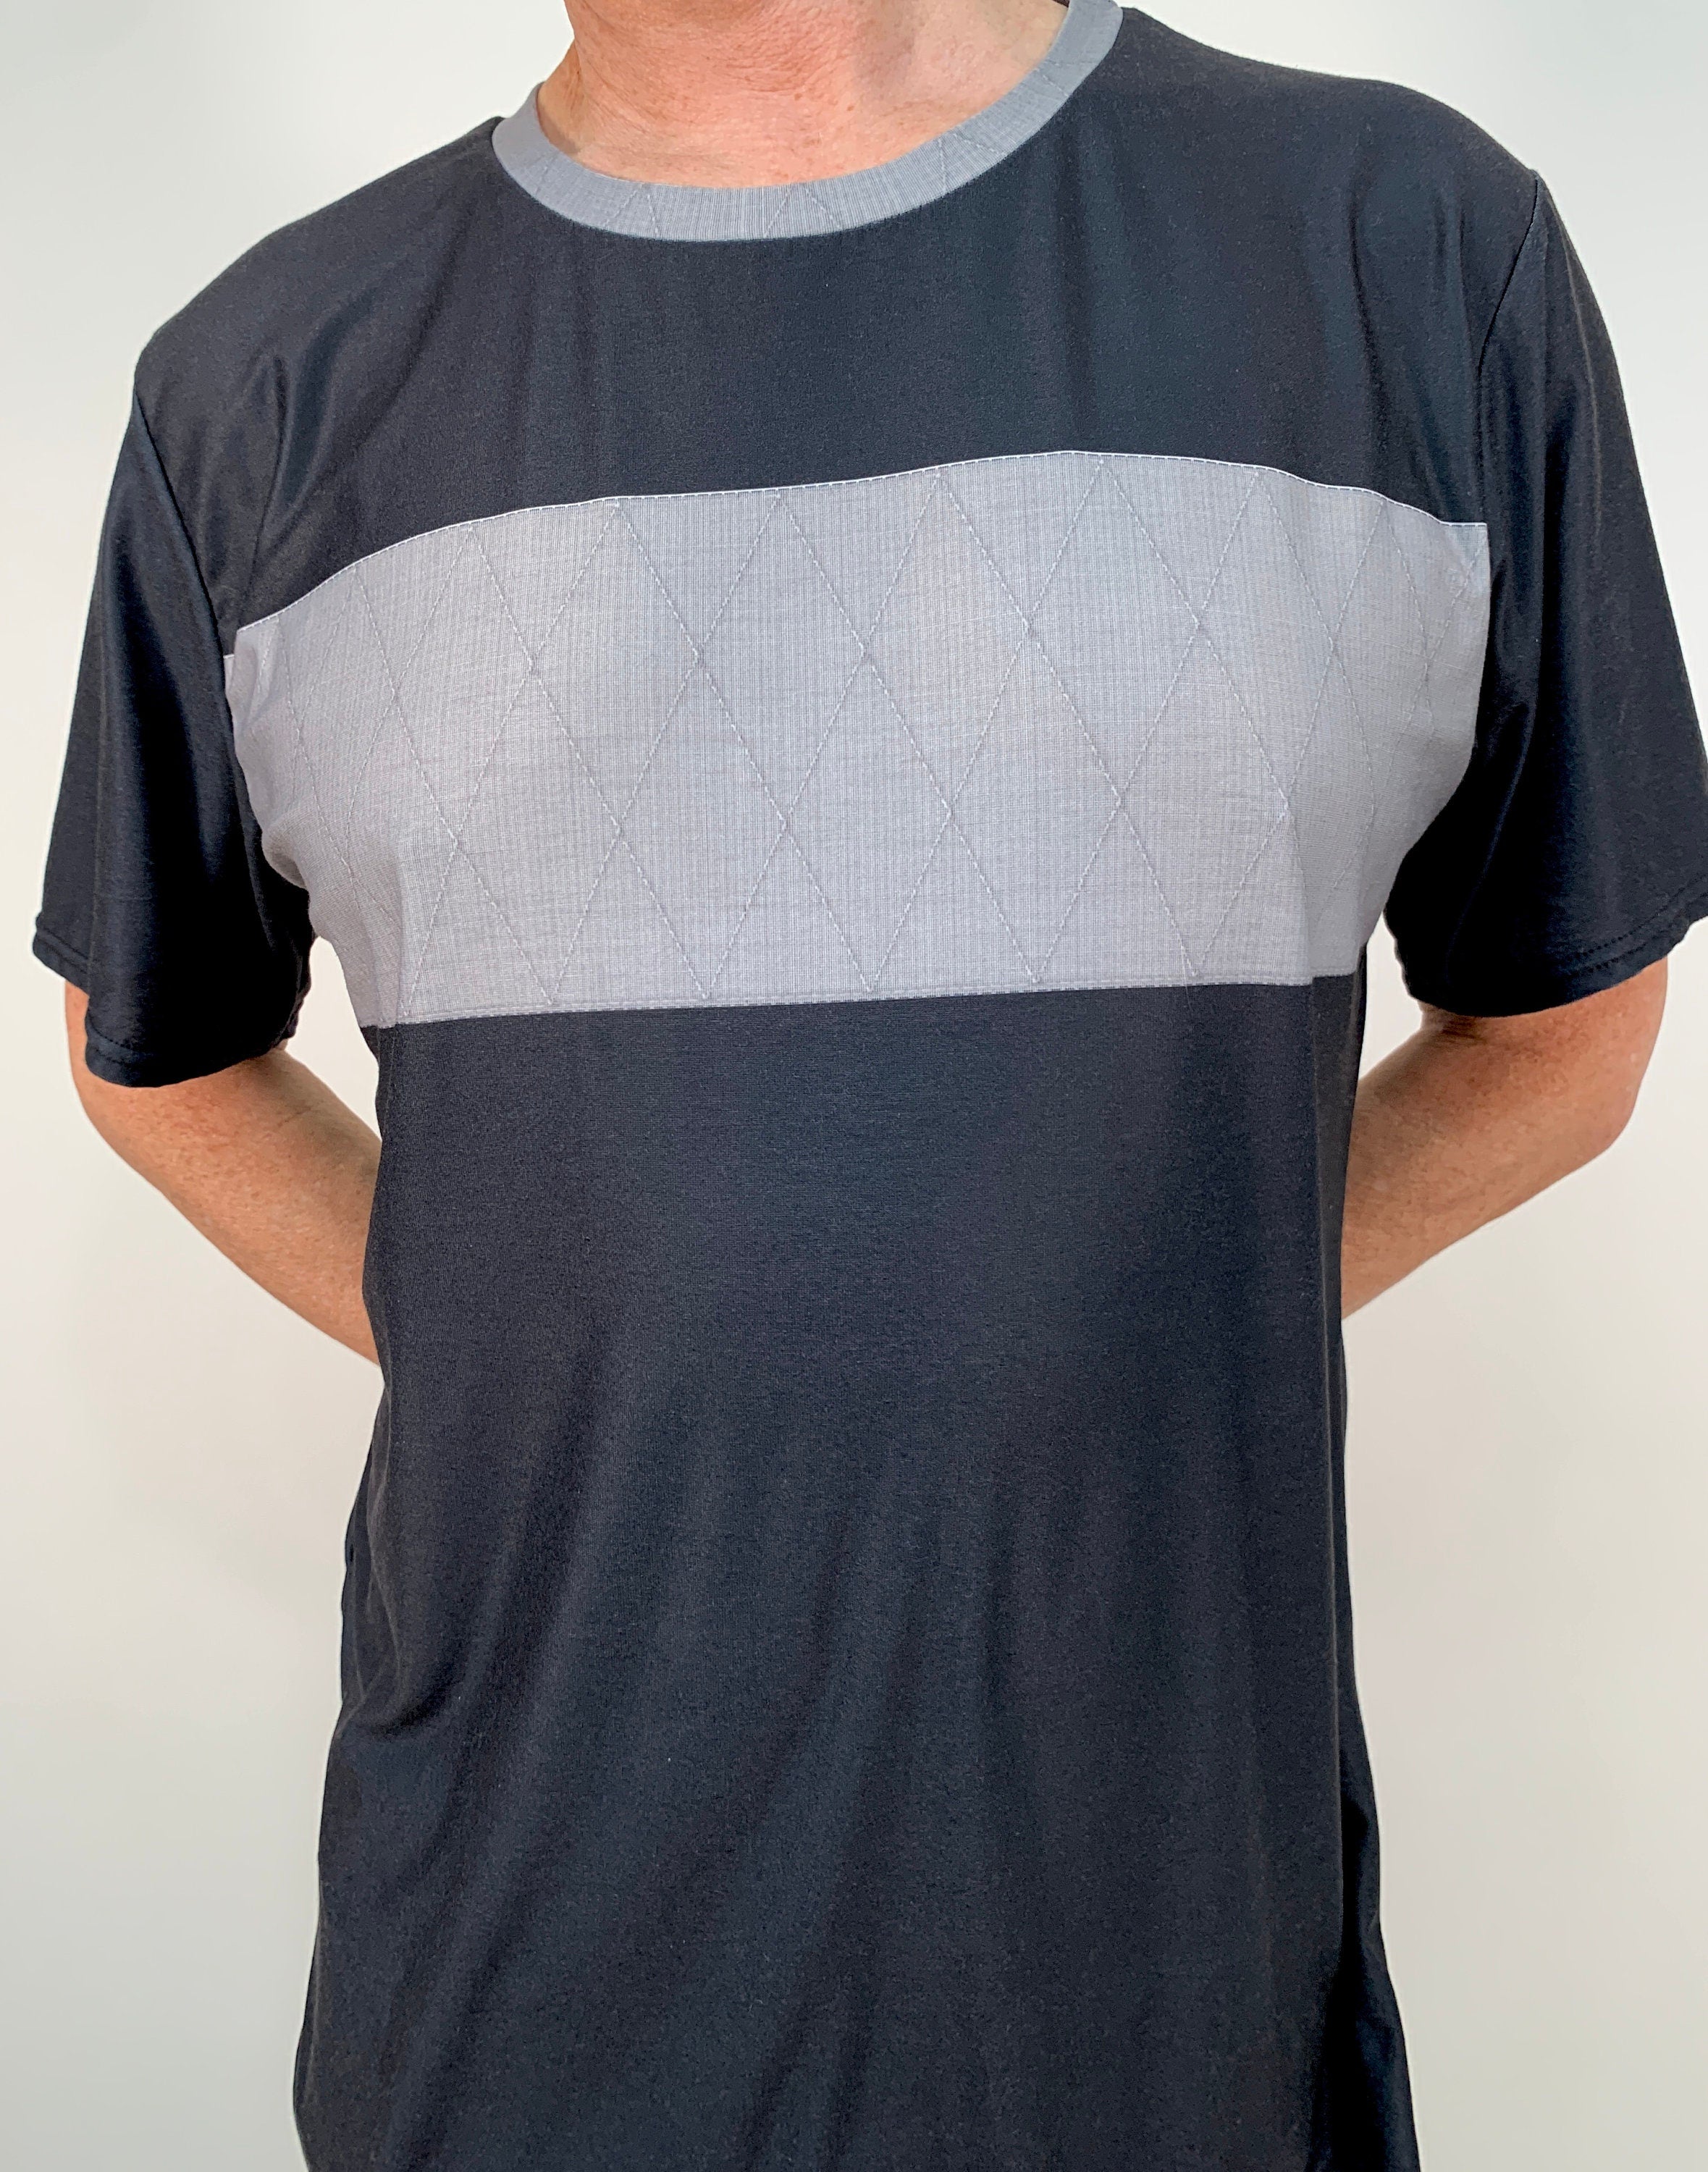 Logan's Sandman T-Shirt Uniform Run